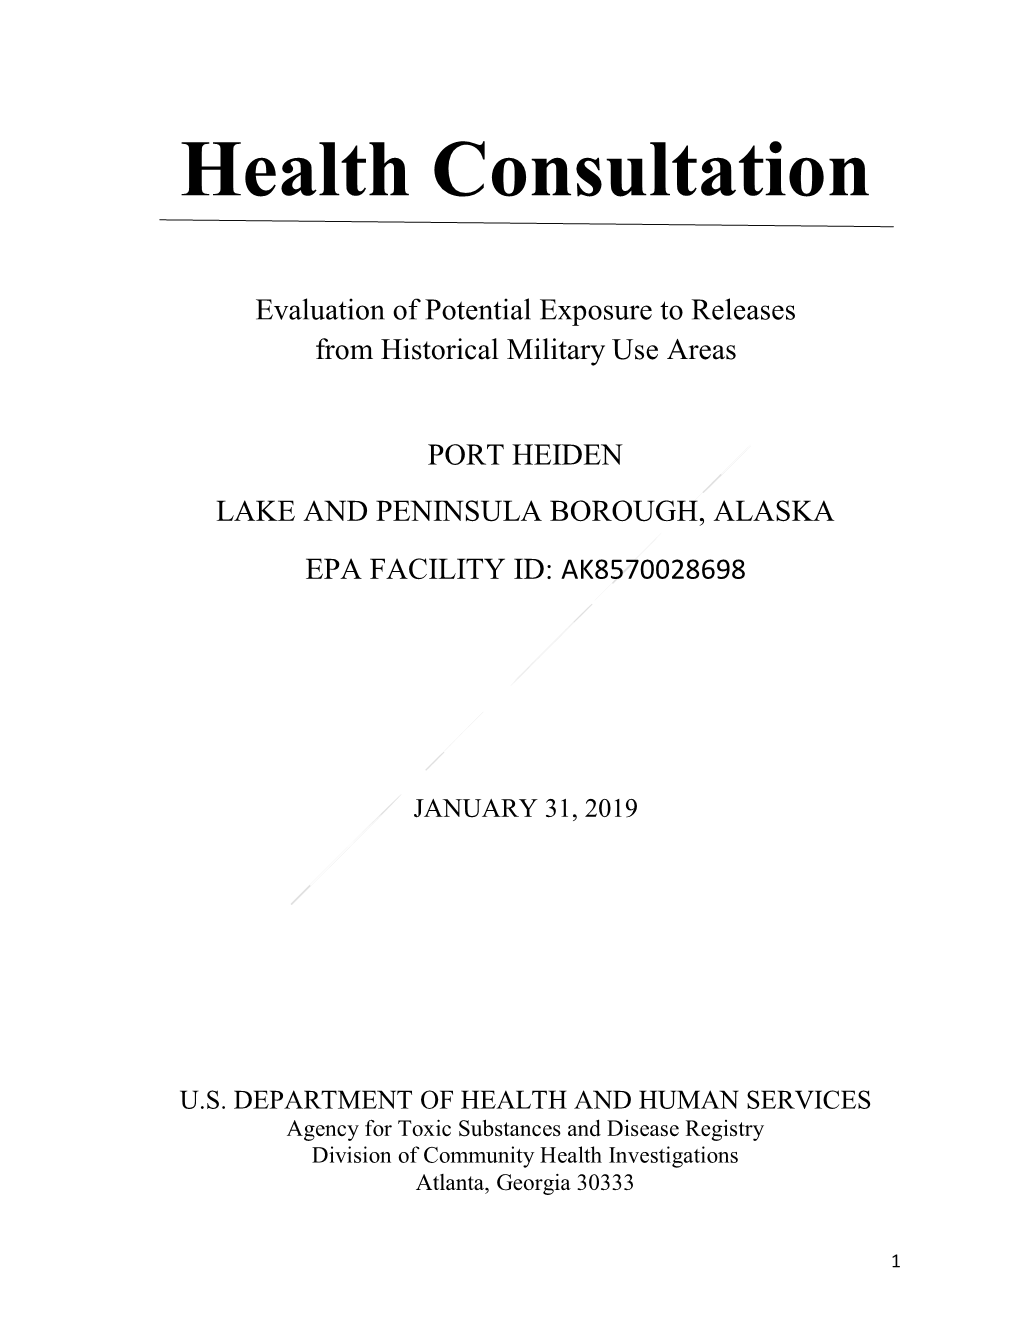 Port Heiden Health Consultation